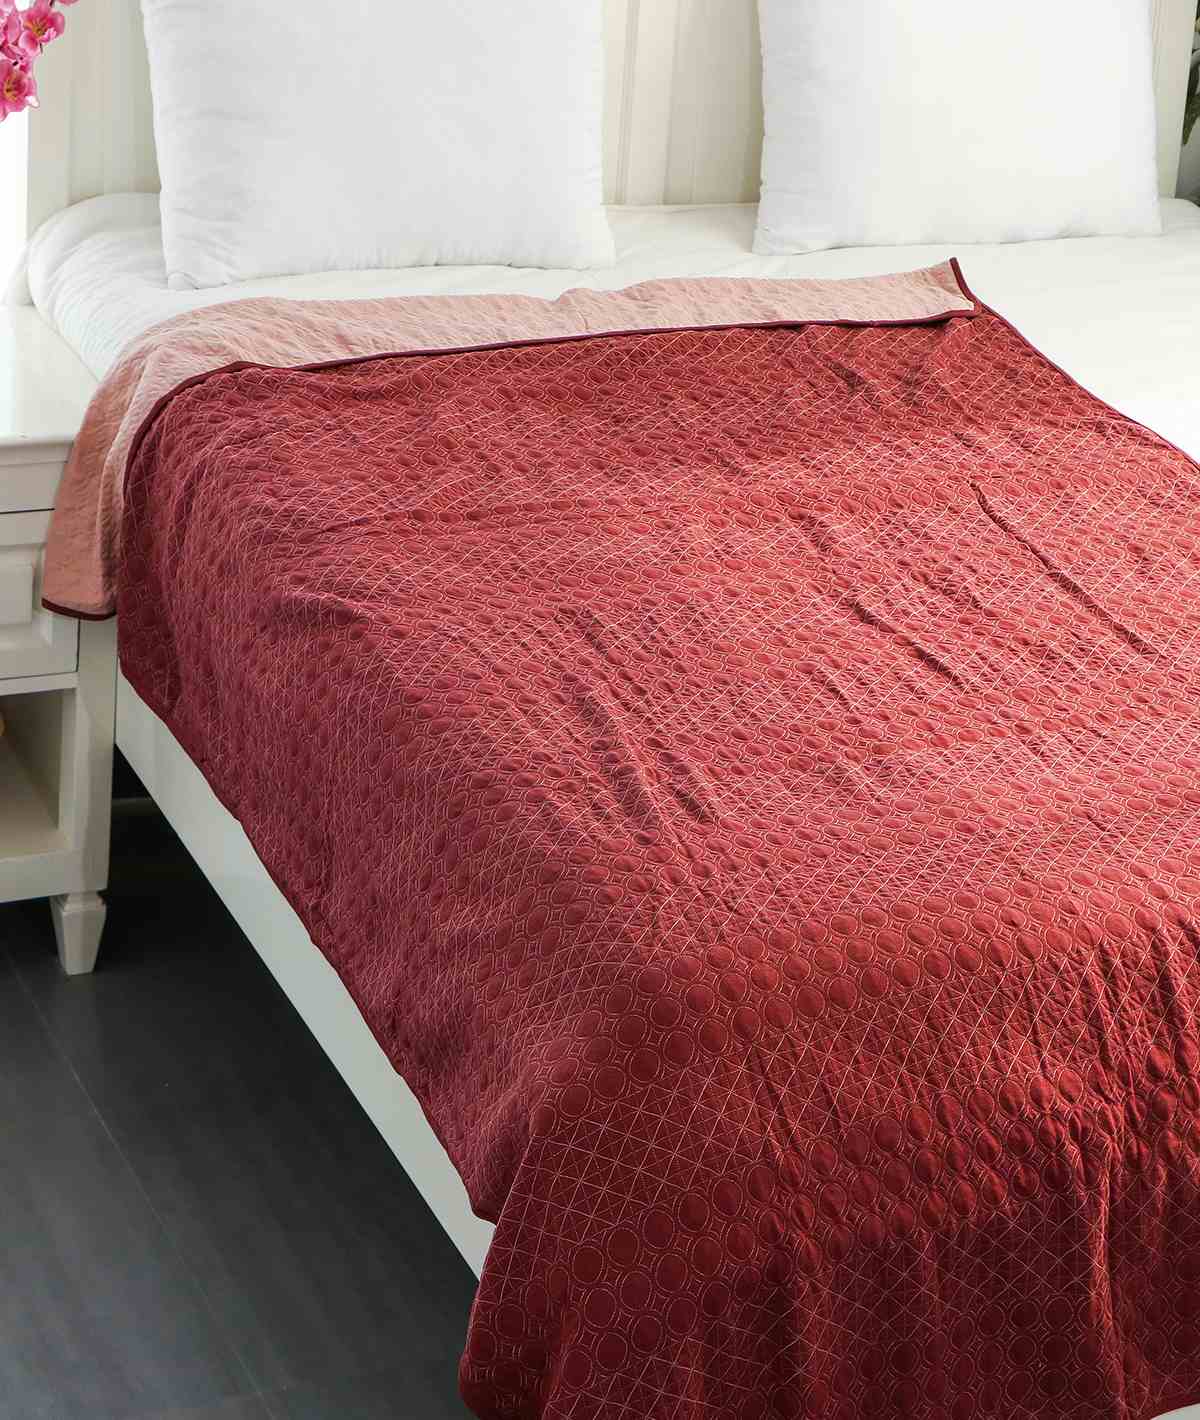 single bed quilt blanket